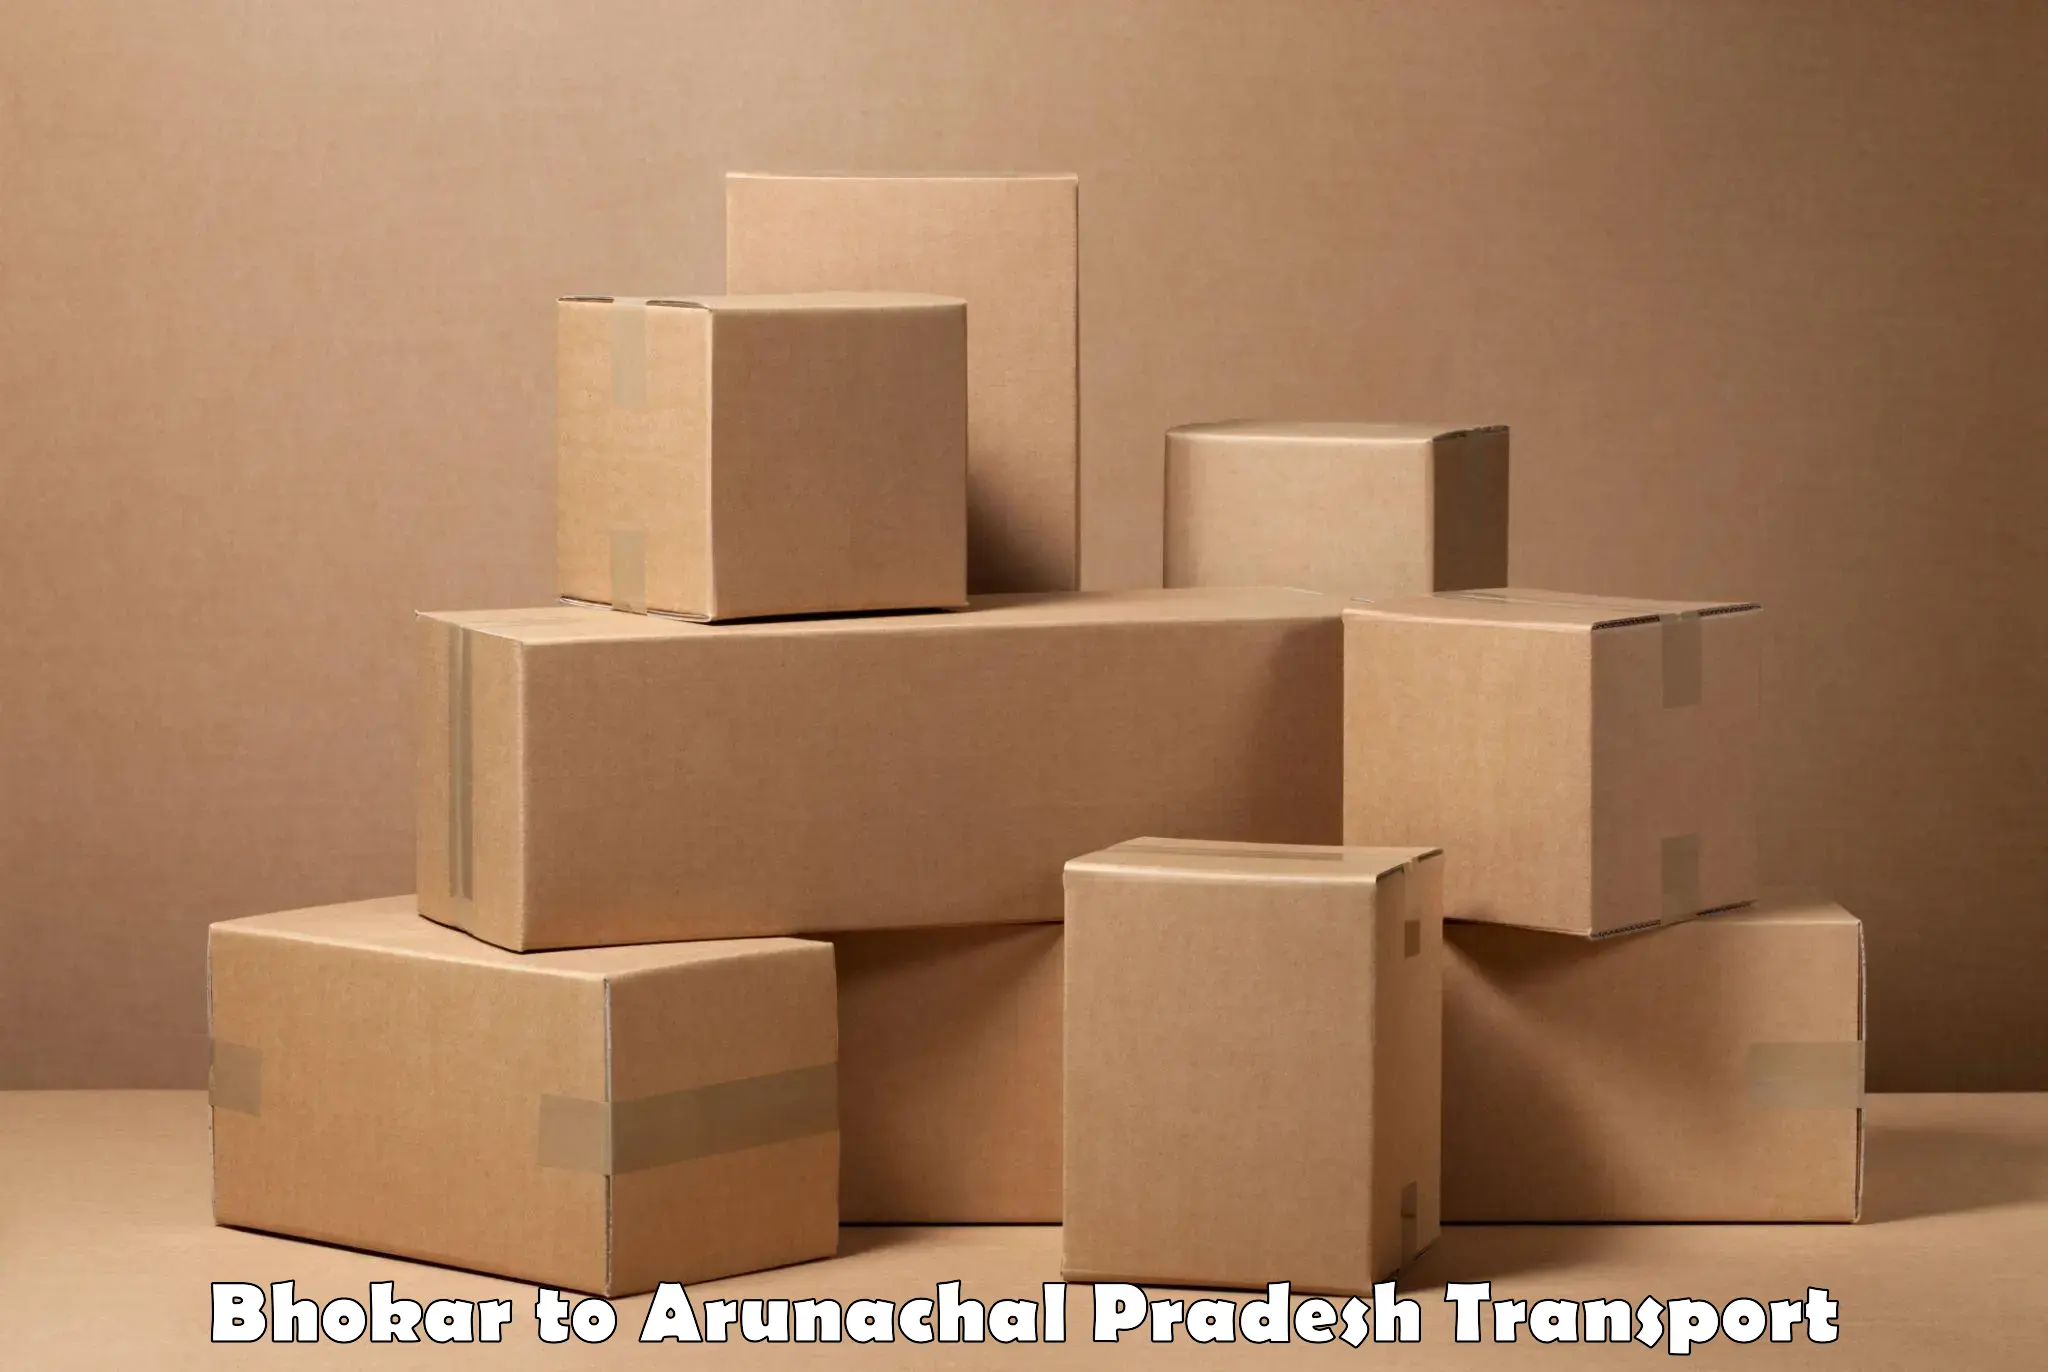 Delivery service Bhokar to Arunachal Pradesh